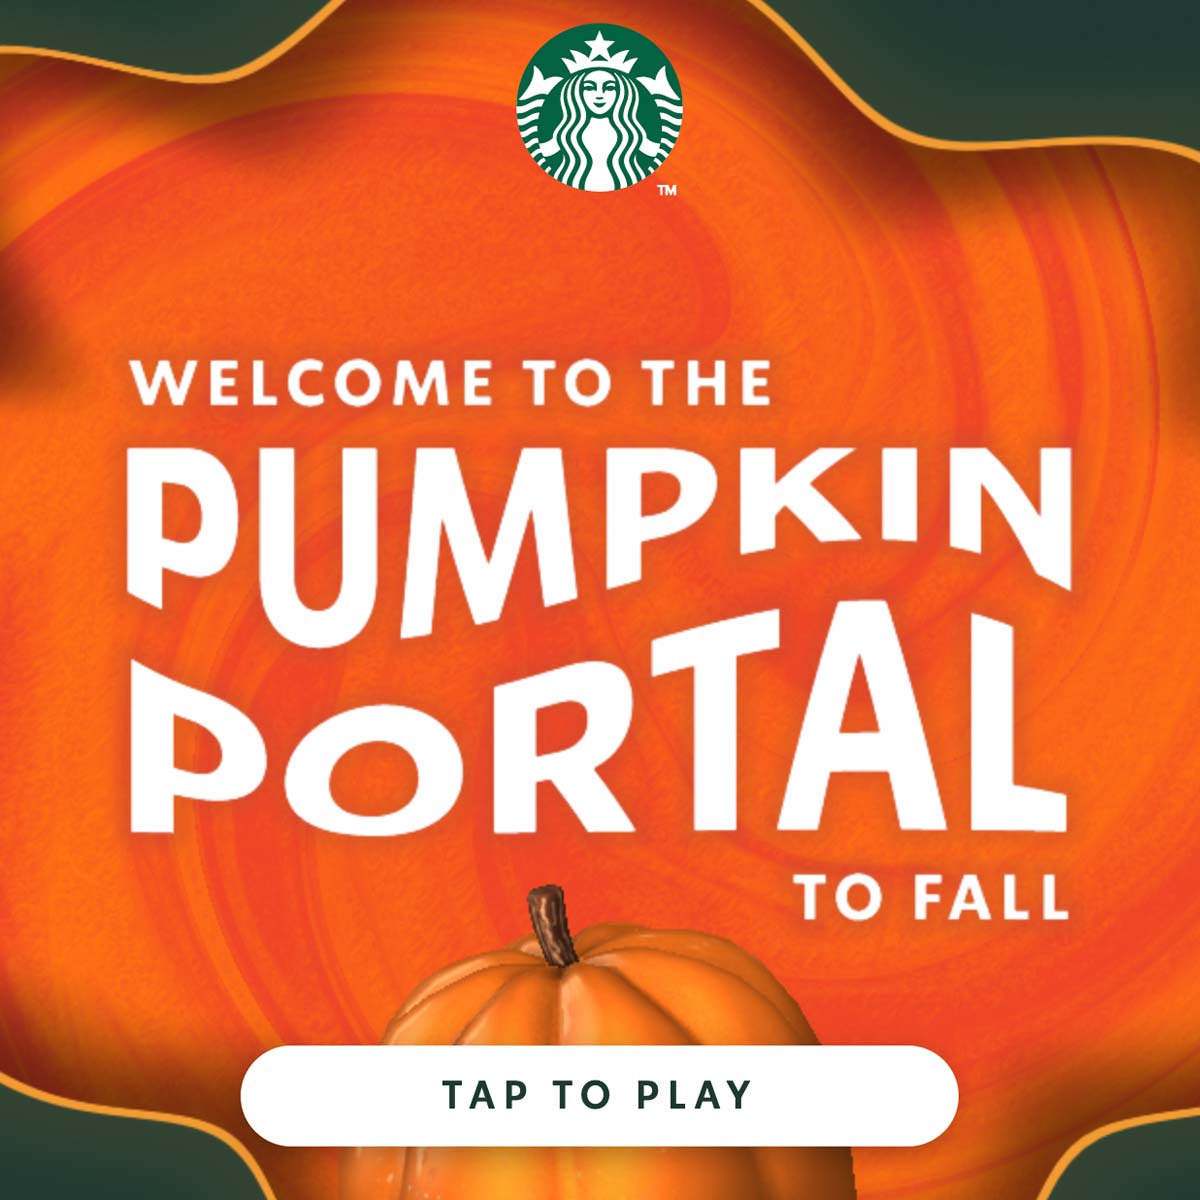 Starbucks Pumpkin Portal to Fall game intro page.